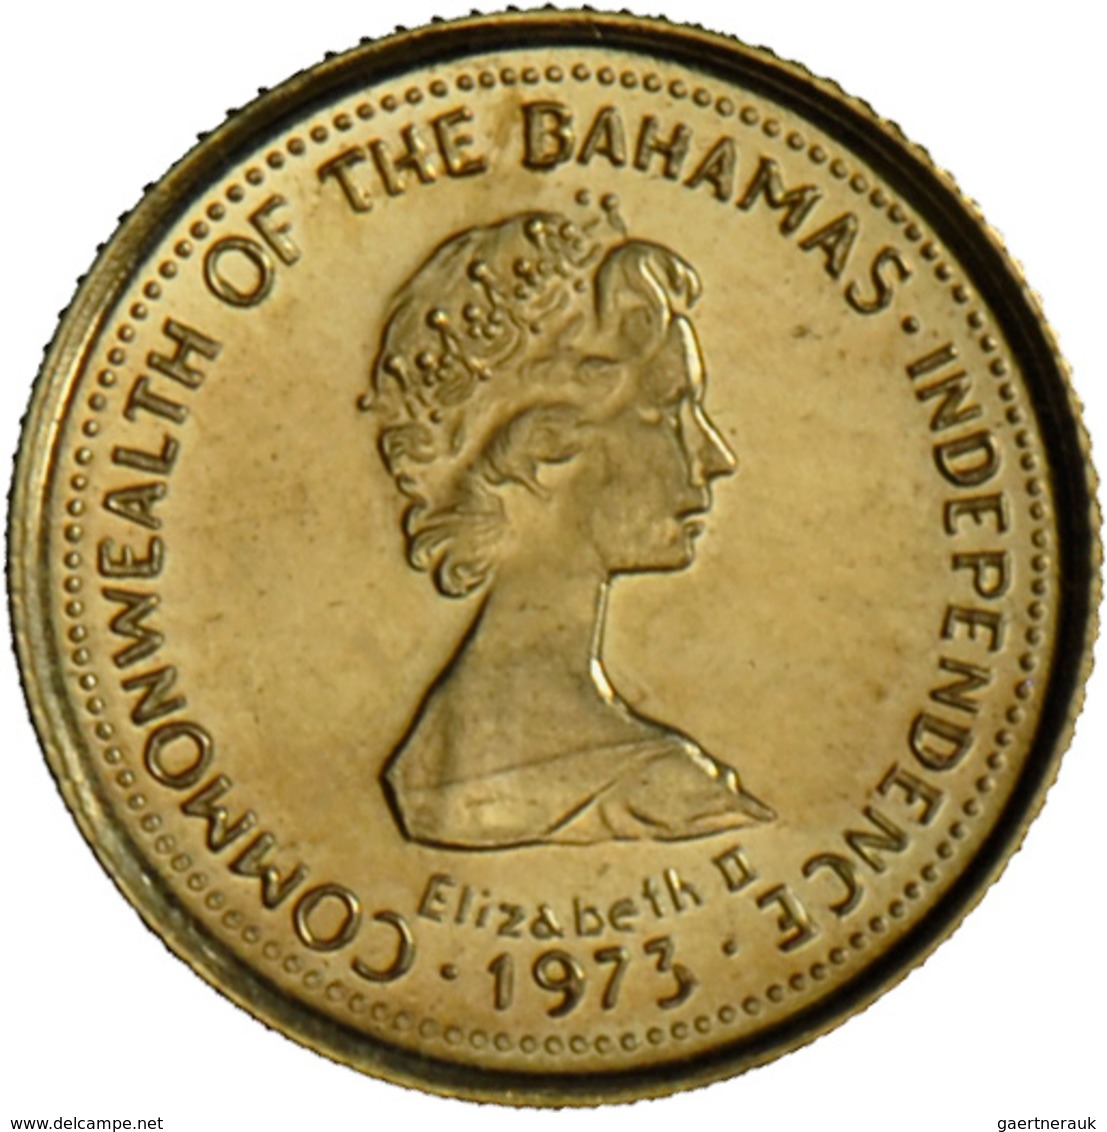 Bahamas - Anlagegold: Independence Serie 1973 aus 750/1000 Gold: 10 Dollars, KM# 40.1 (1,45g), 20 Do